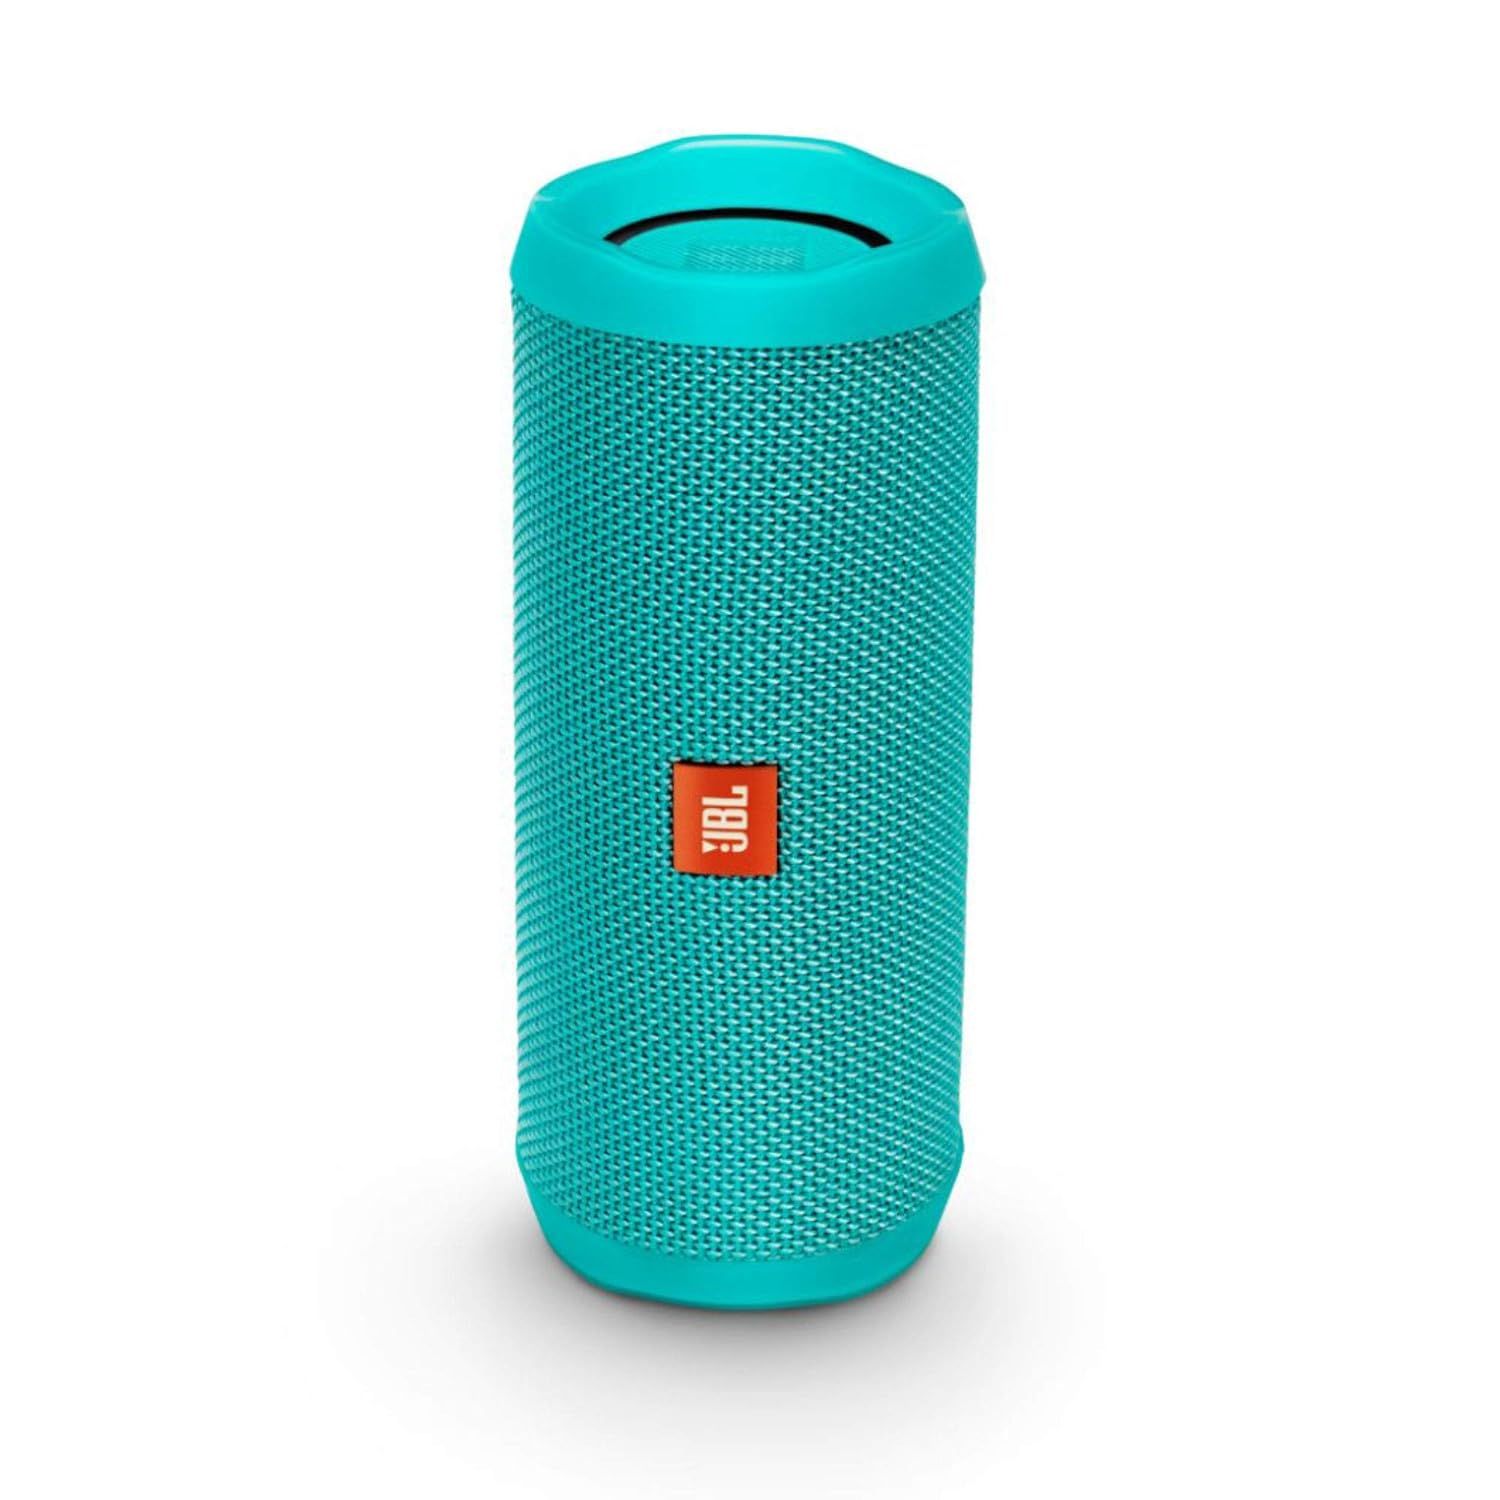 Jbl Flip 4 Waterproof Portable Bluetooth Speaker (teal), 2.6 Lb | Amazon (US)